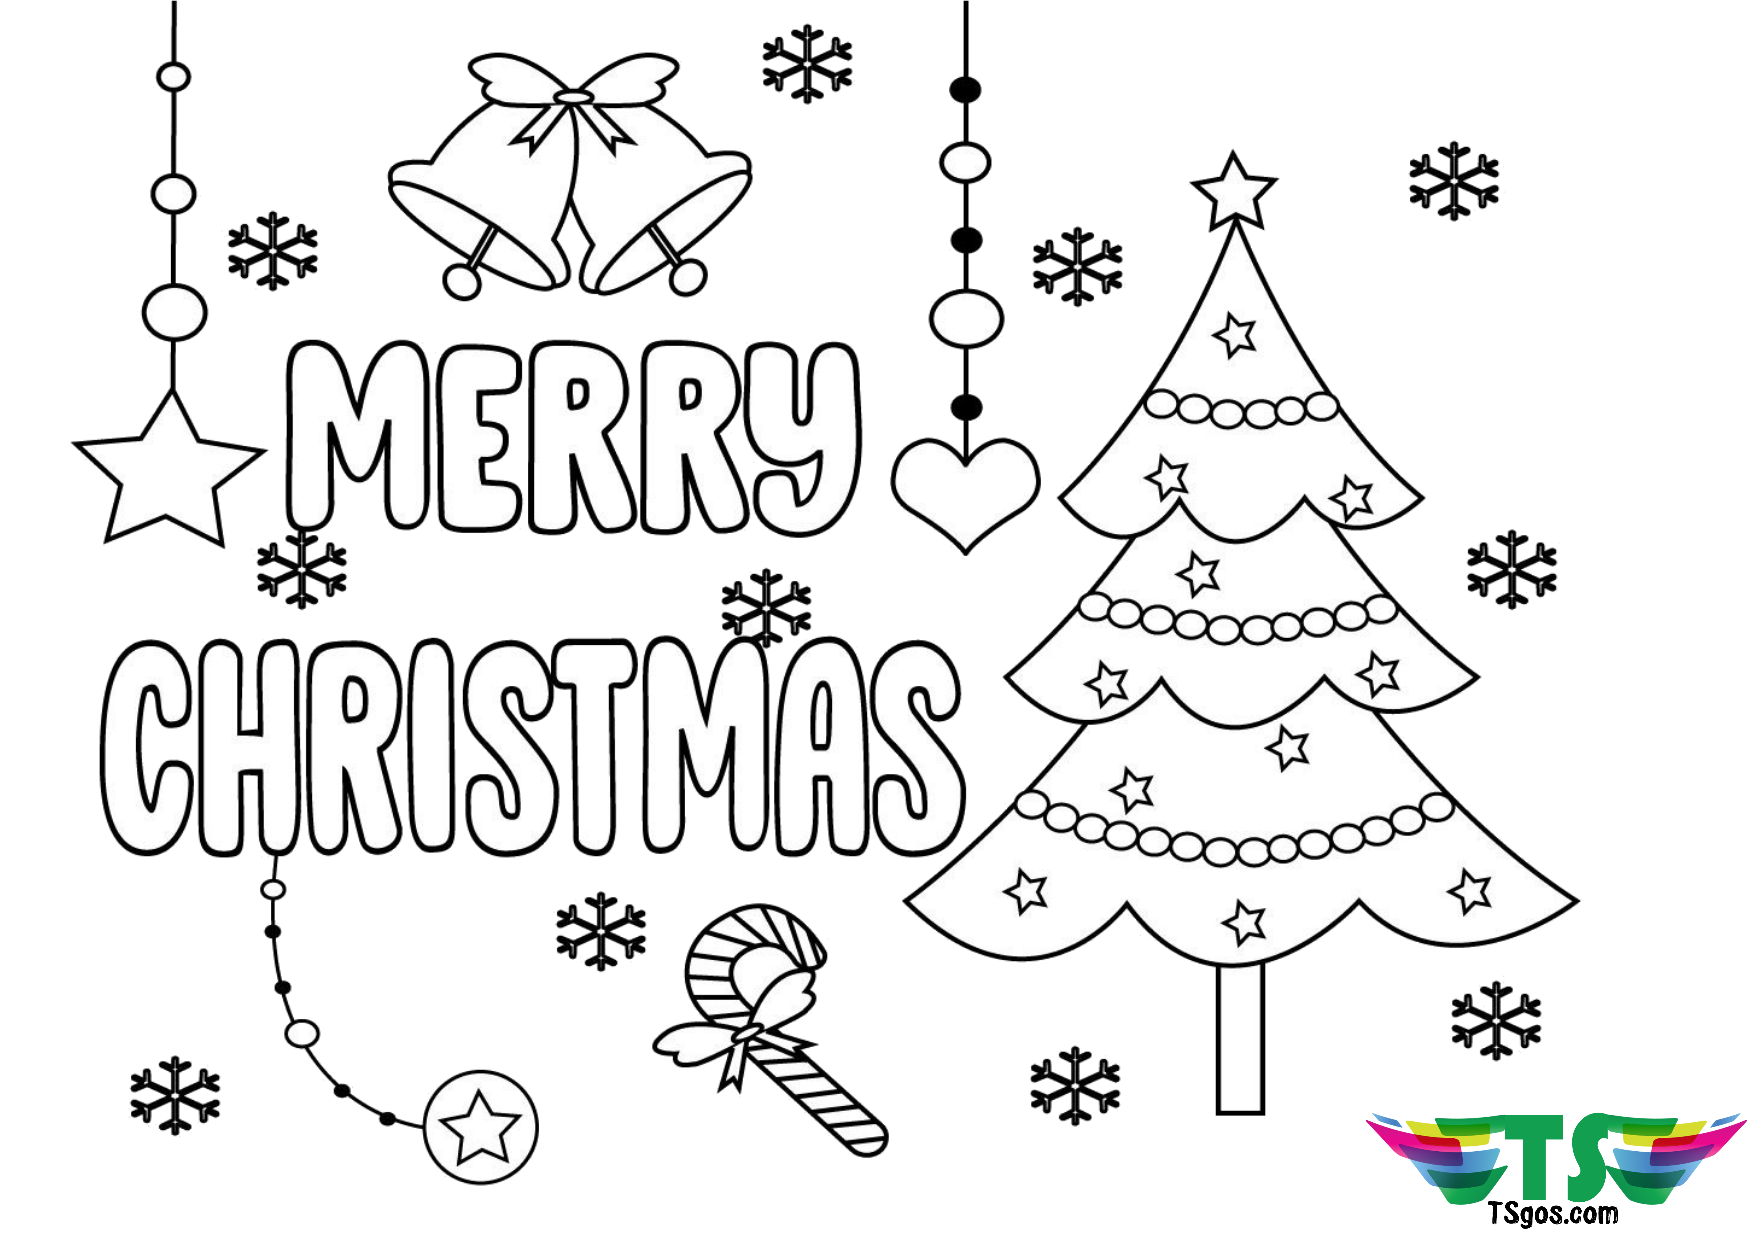 Merry Christmas free printable coloring page.